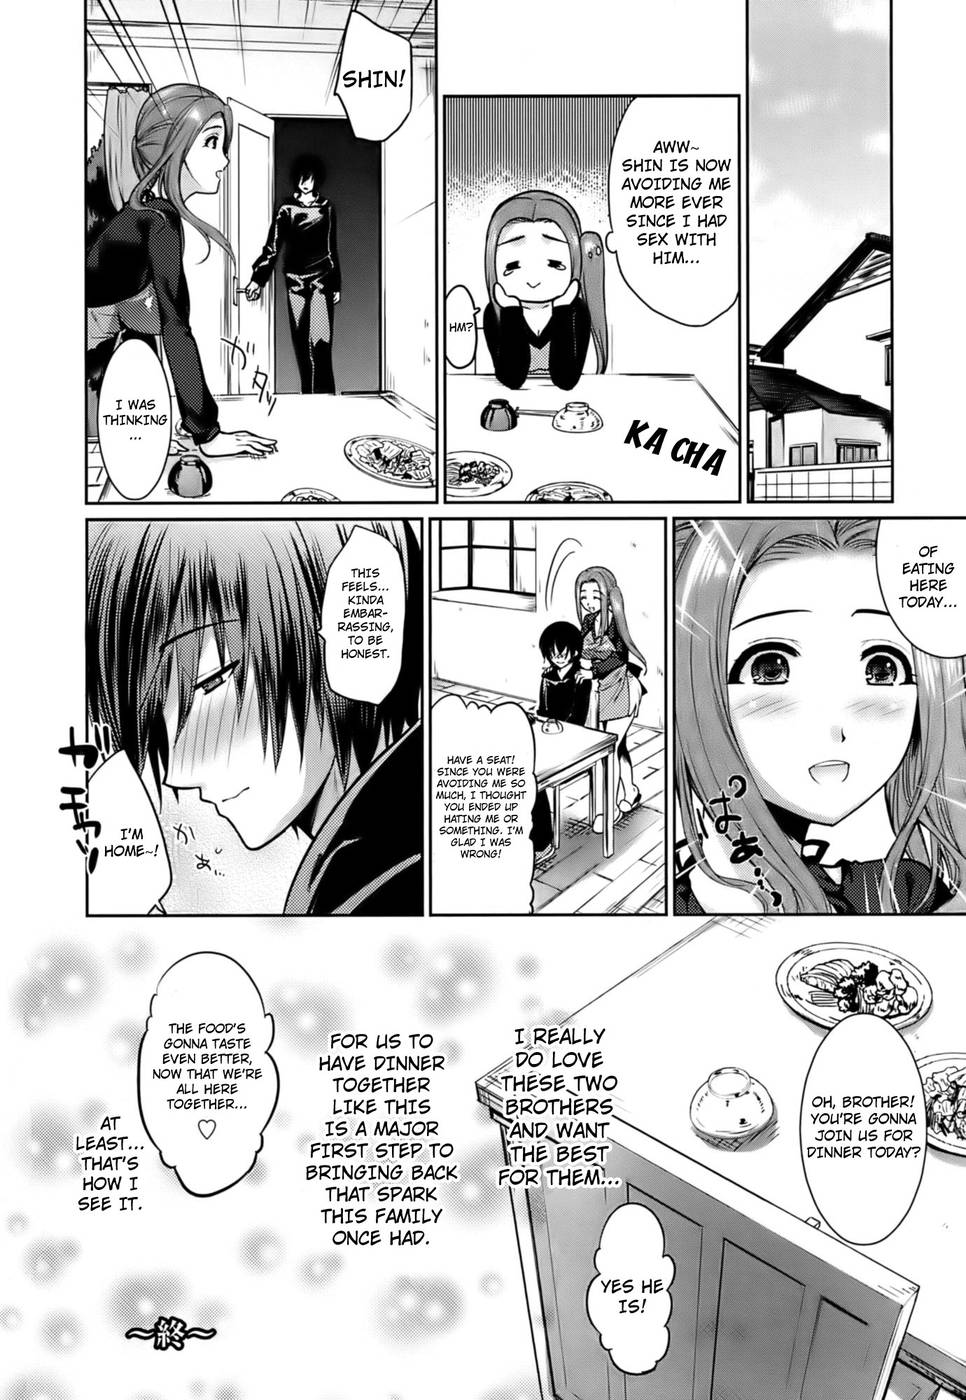 Hentai Manga Comic-Hazukashii Chibusa-Chapter 4: Sibling Union-20